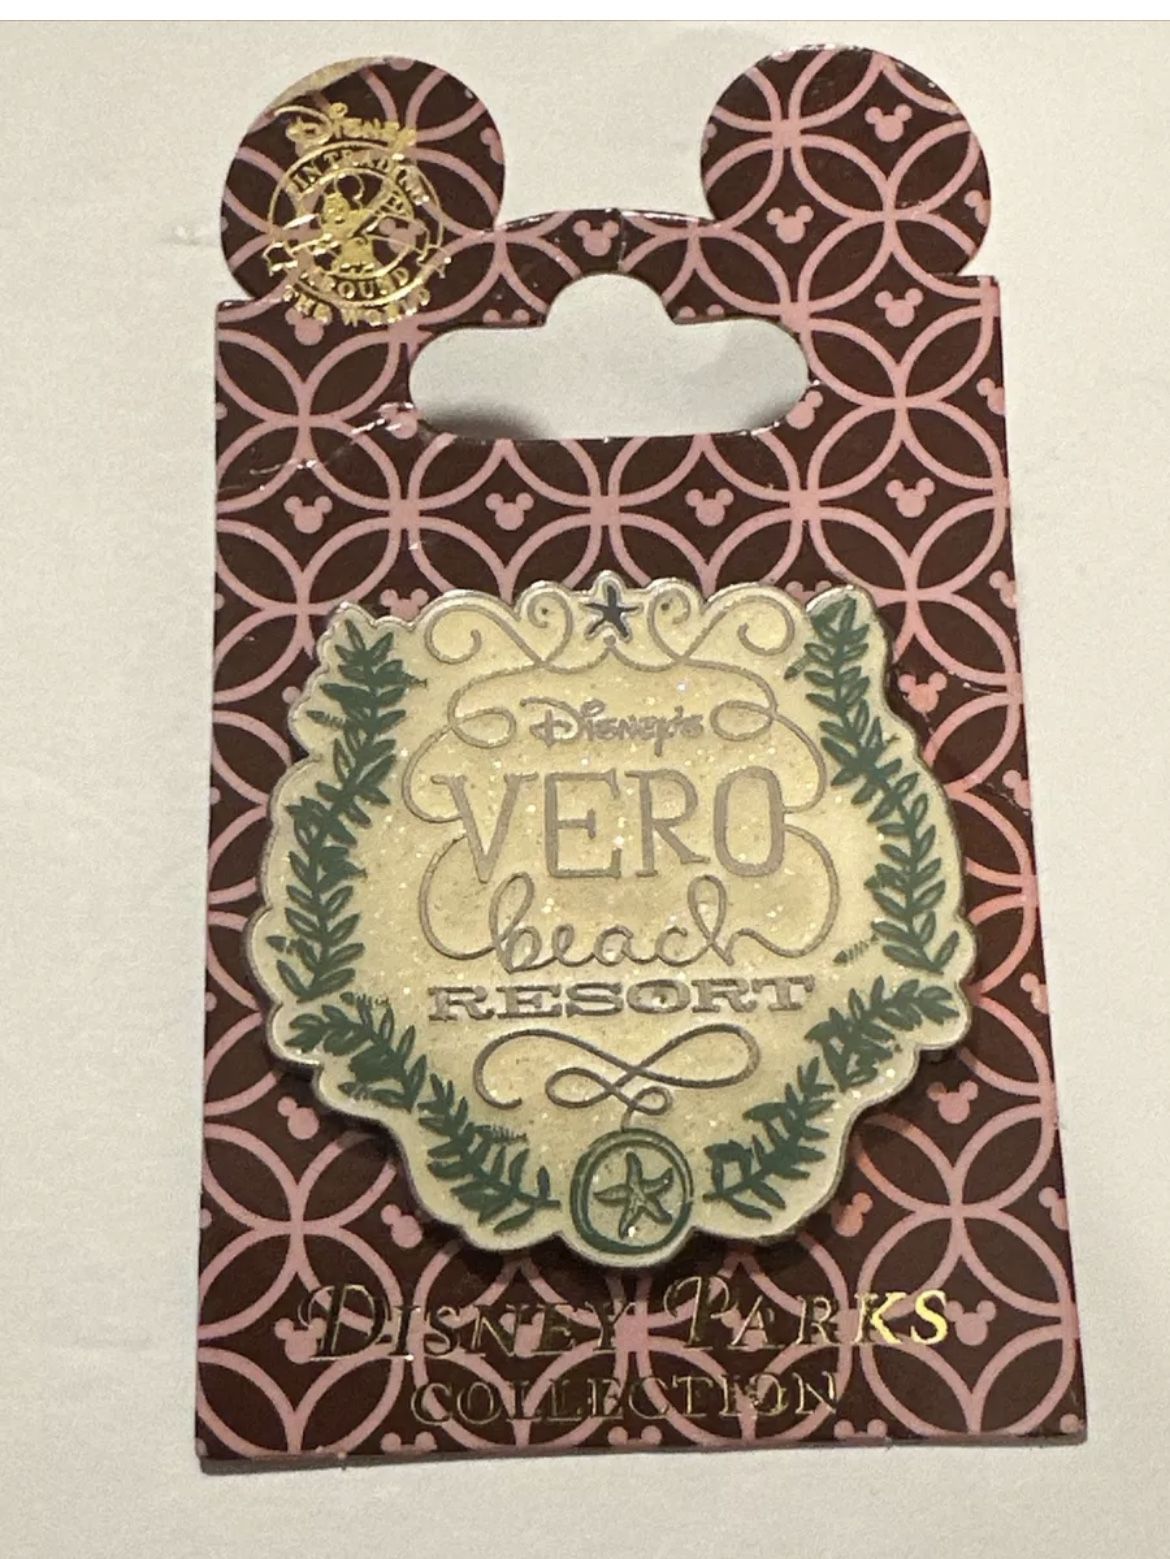 Beautiful Glittery Vine Design Disney's Vero Beach Resort Collectible Pin